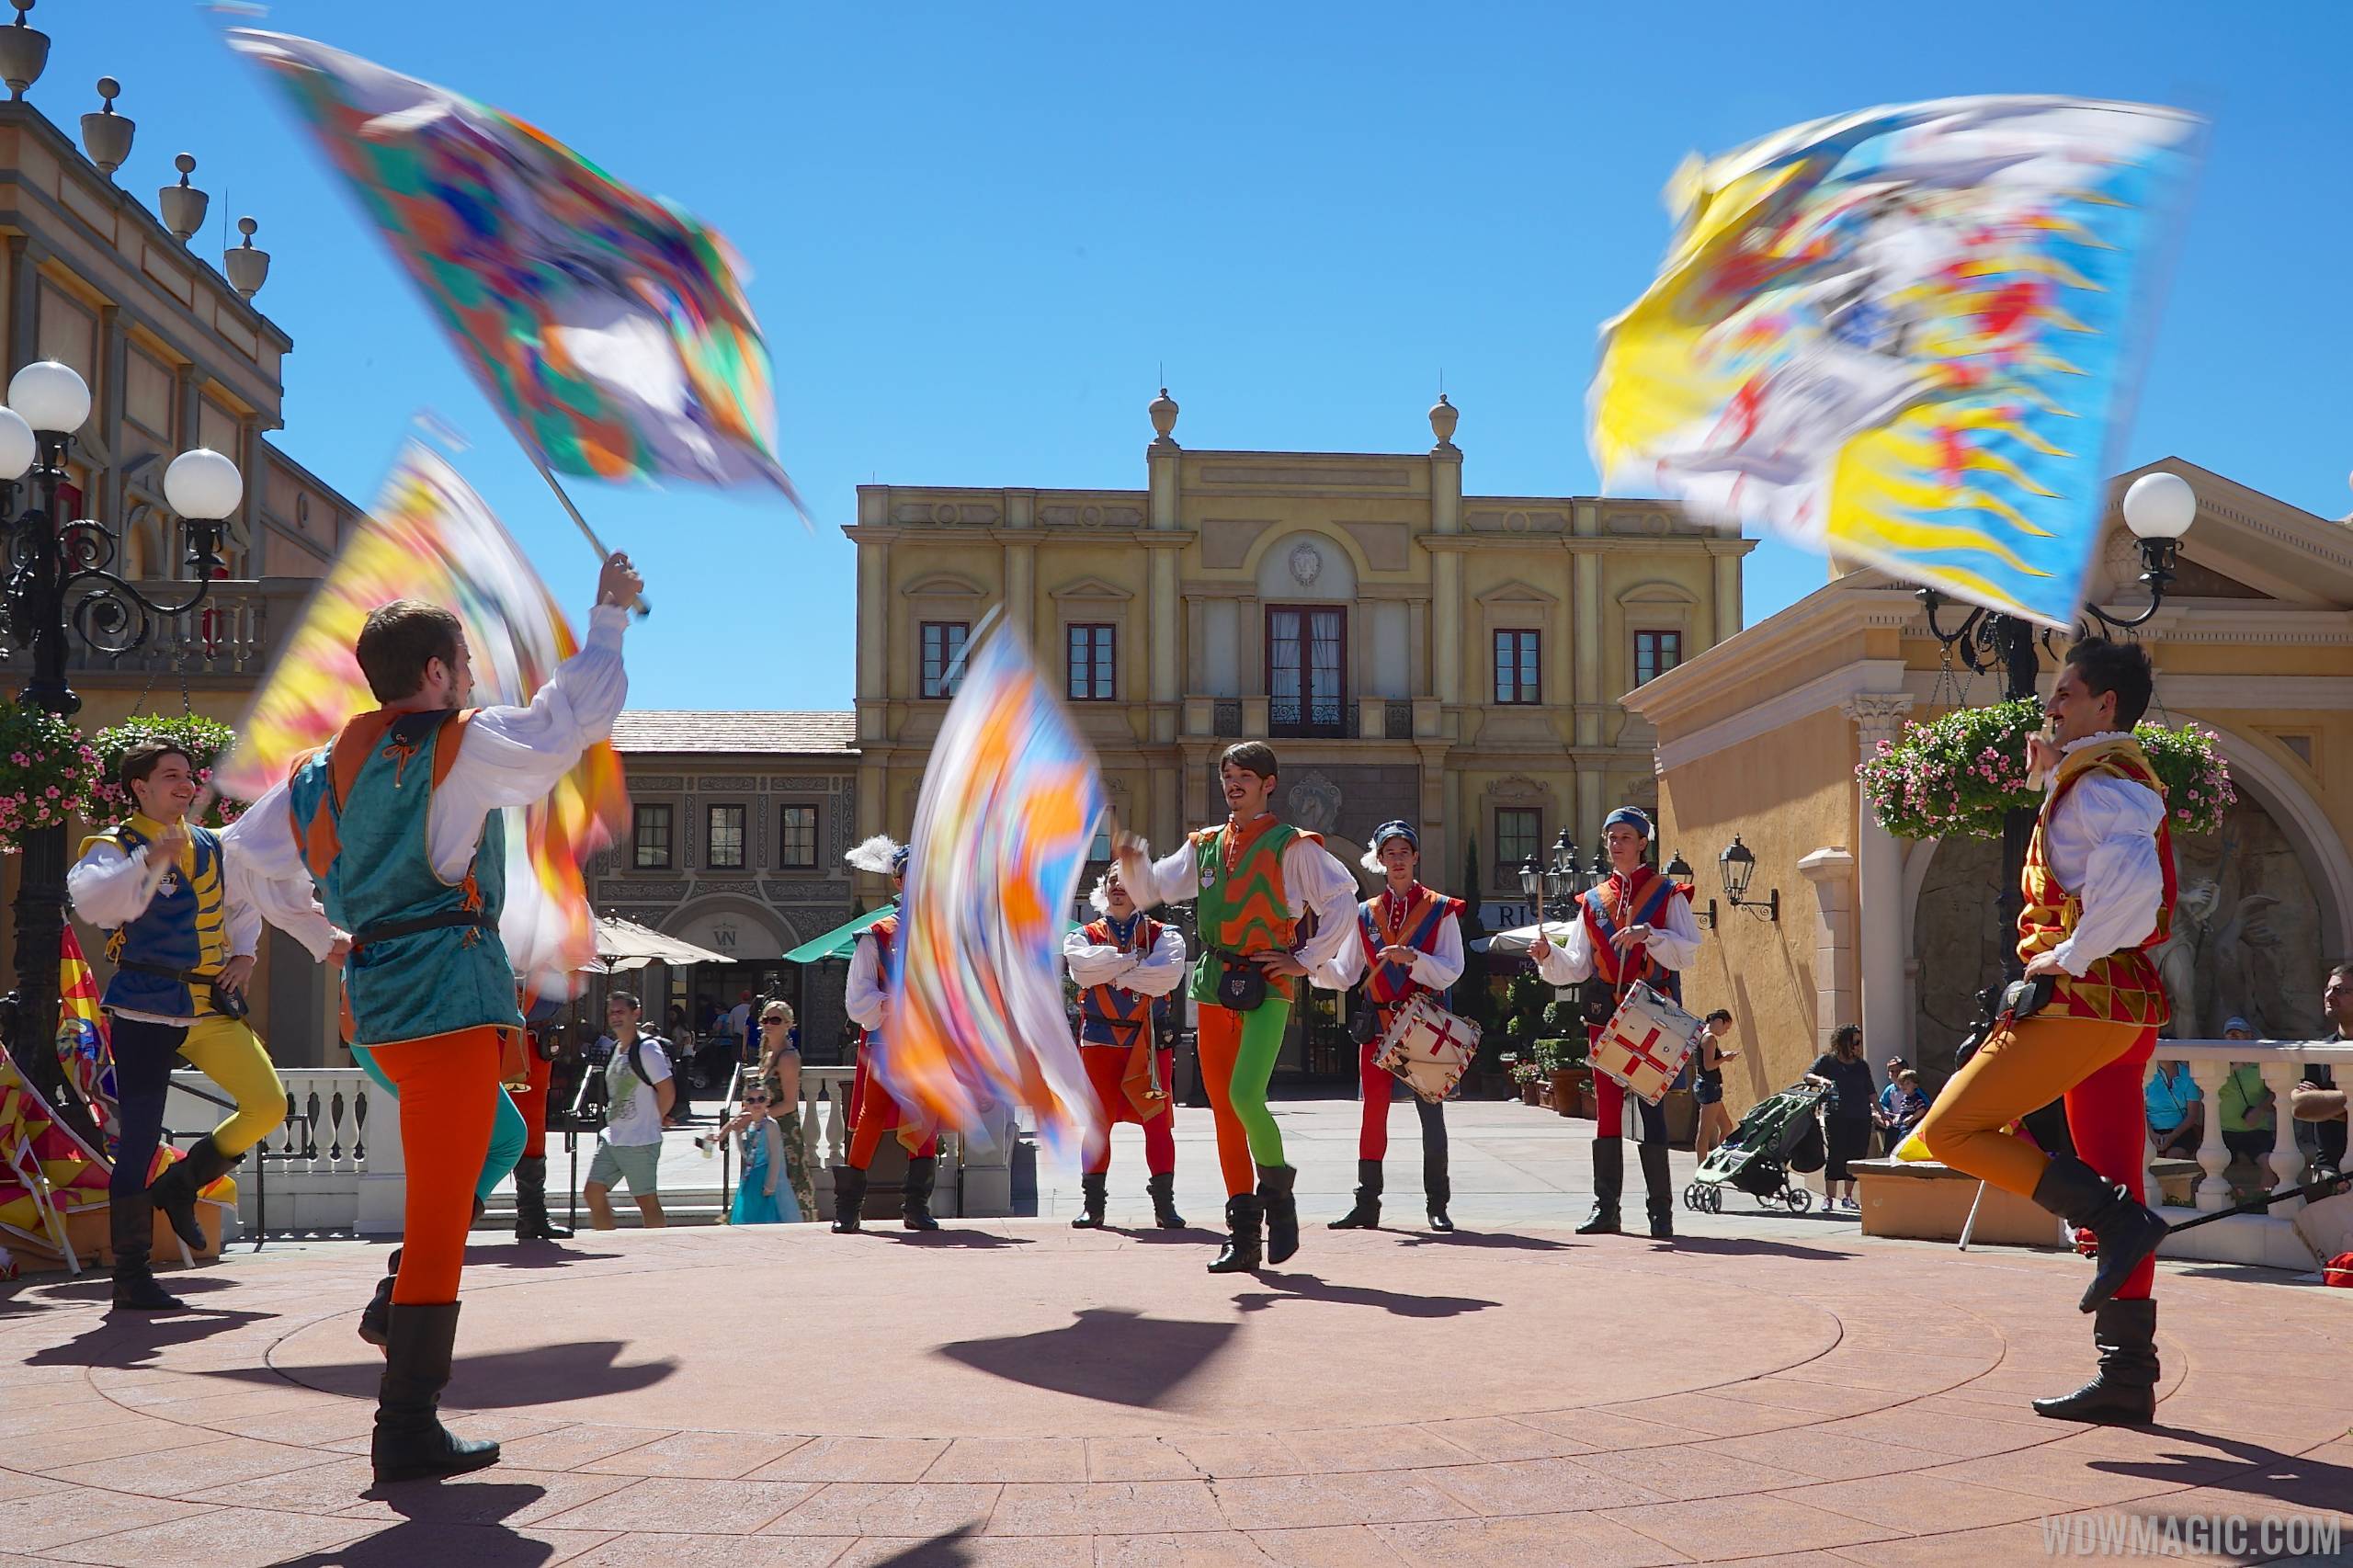 Sbandieratori Di Sansepolcro - Italy Flag Waving performance